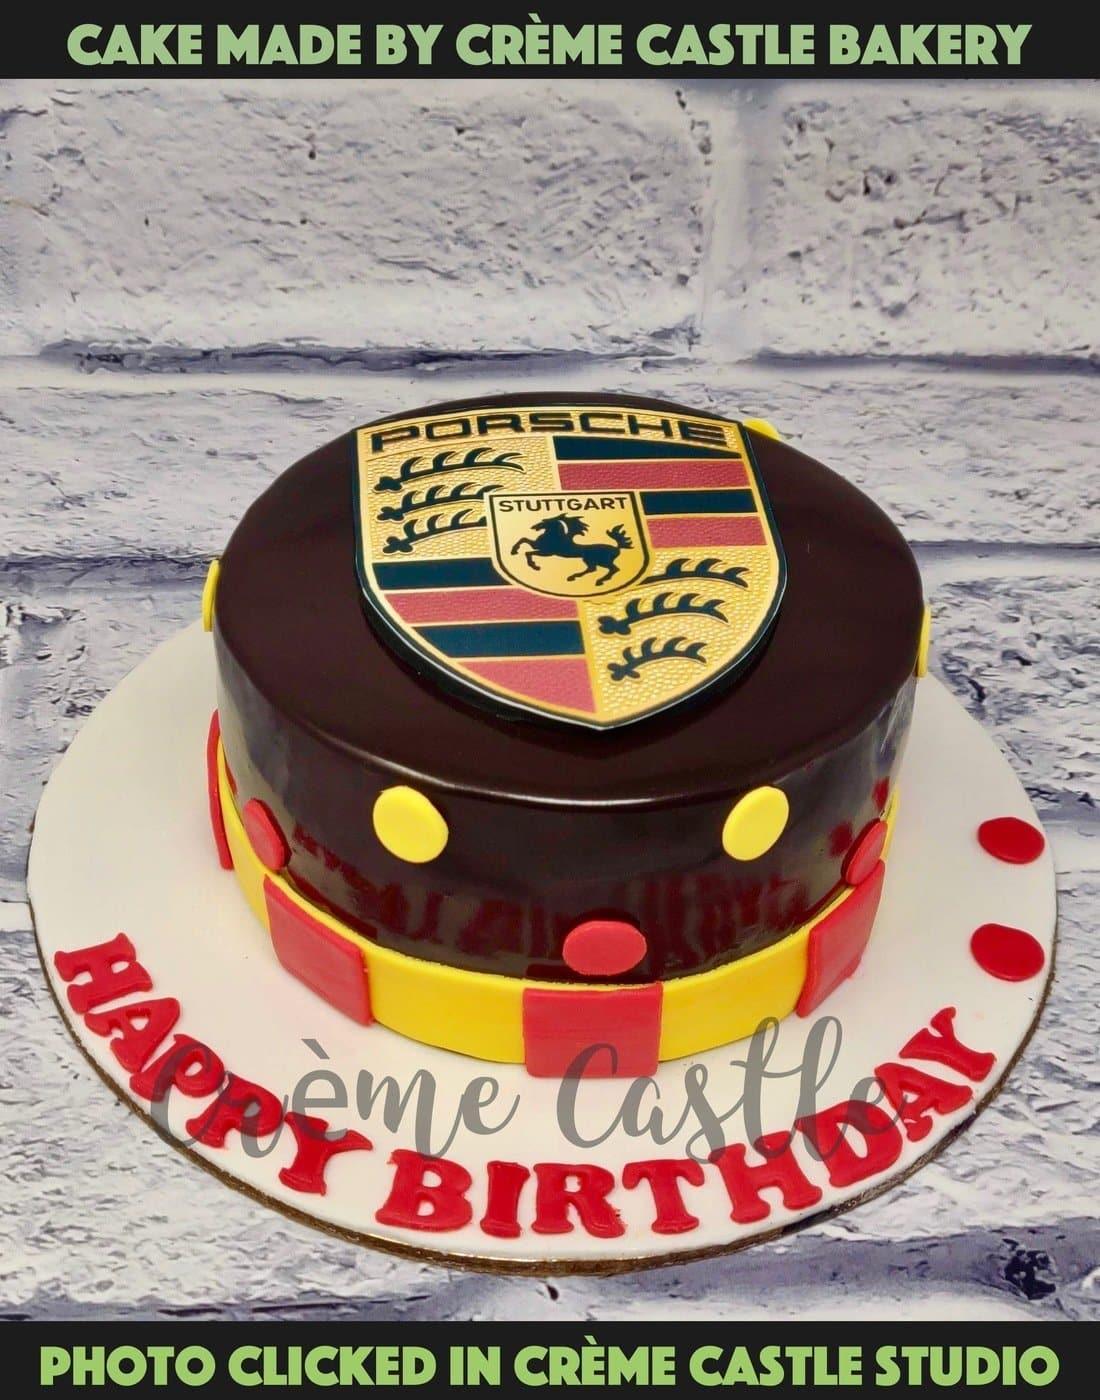 Georgeous cakes - Tyre inspired cake #motorbiketyre #tyres #cake #birthday  #motorbike #car #30th #westmidlands | Facebook